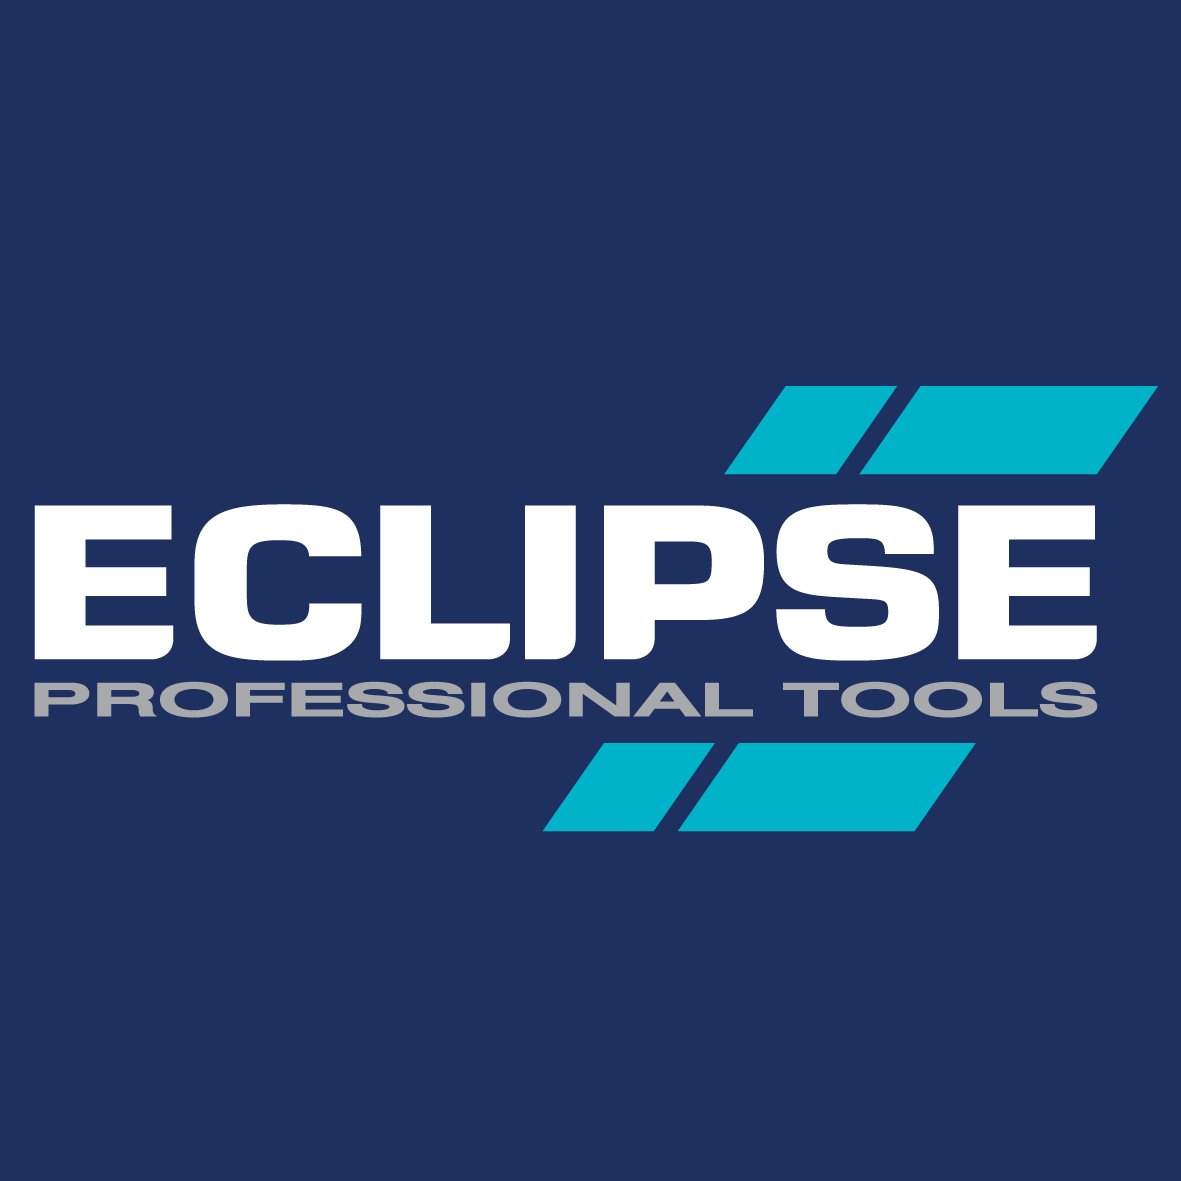 Eclipse Professional Tools